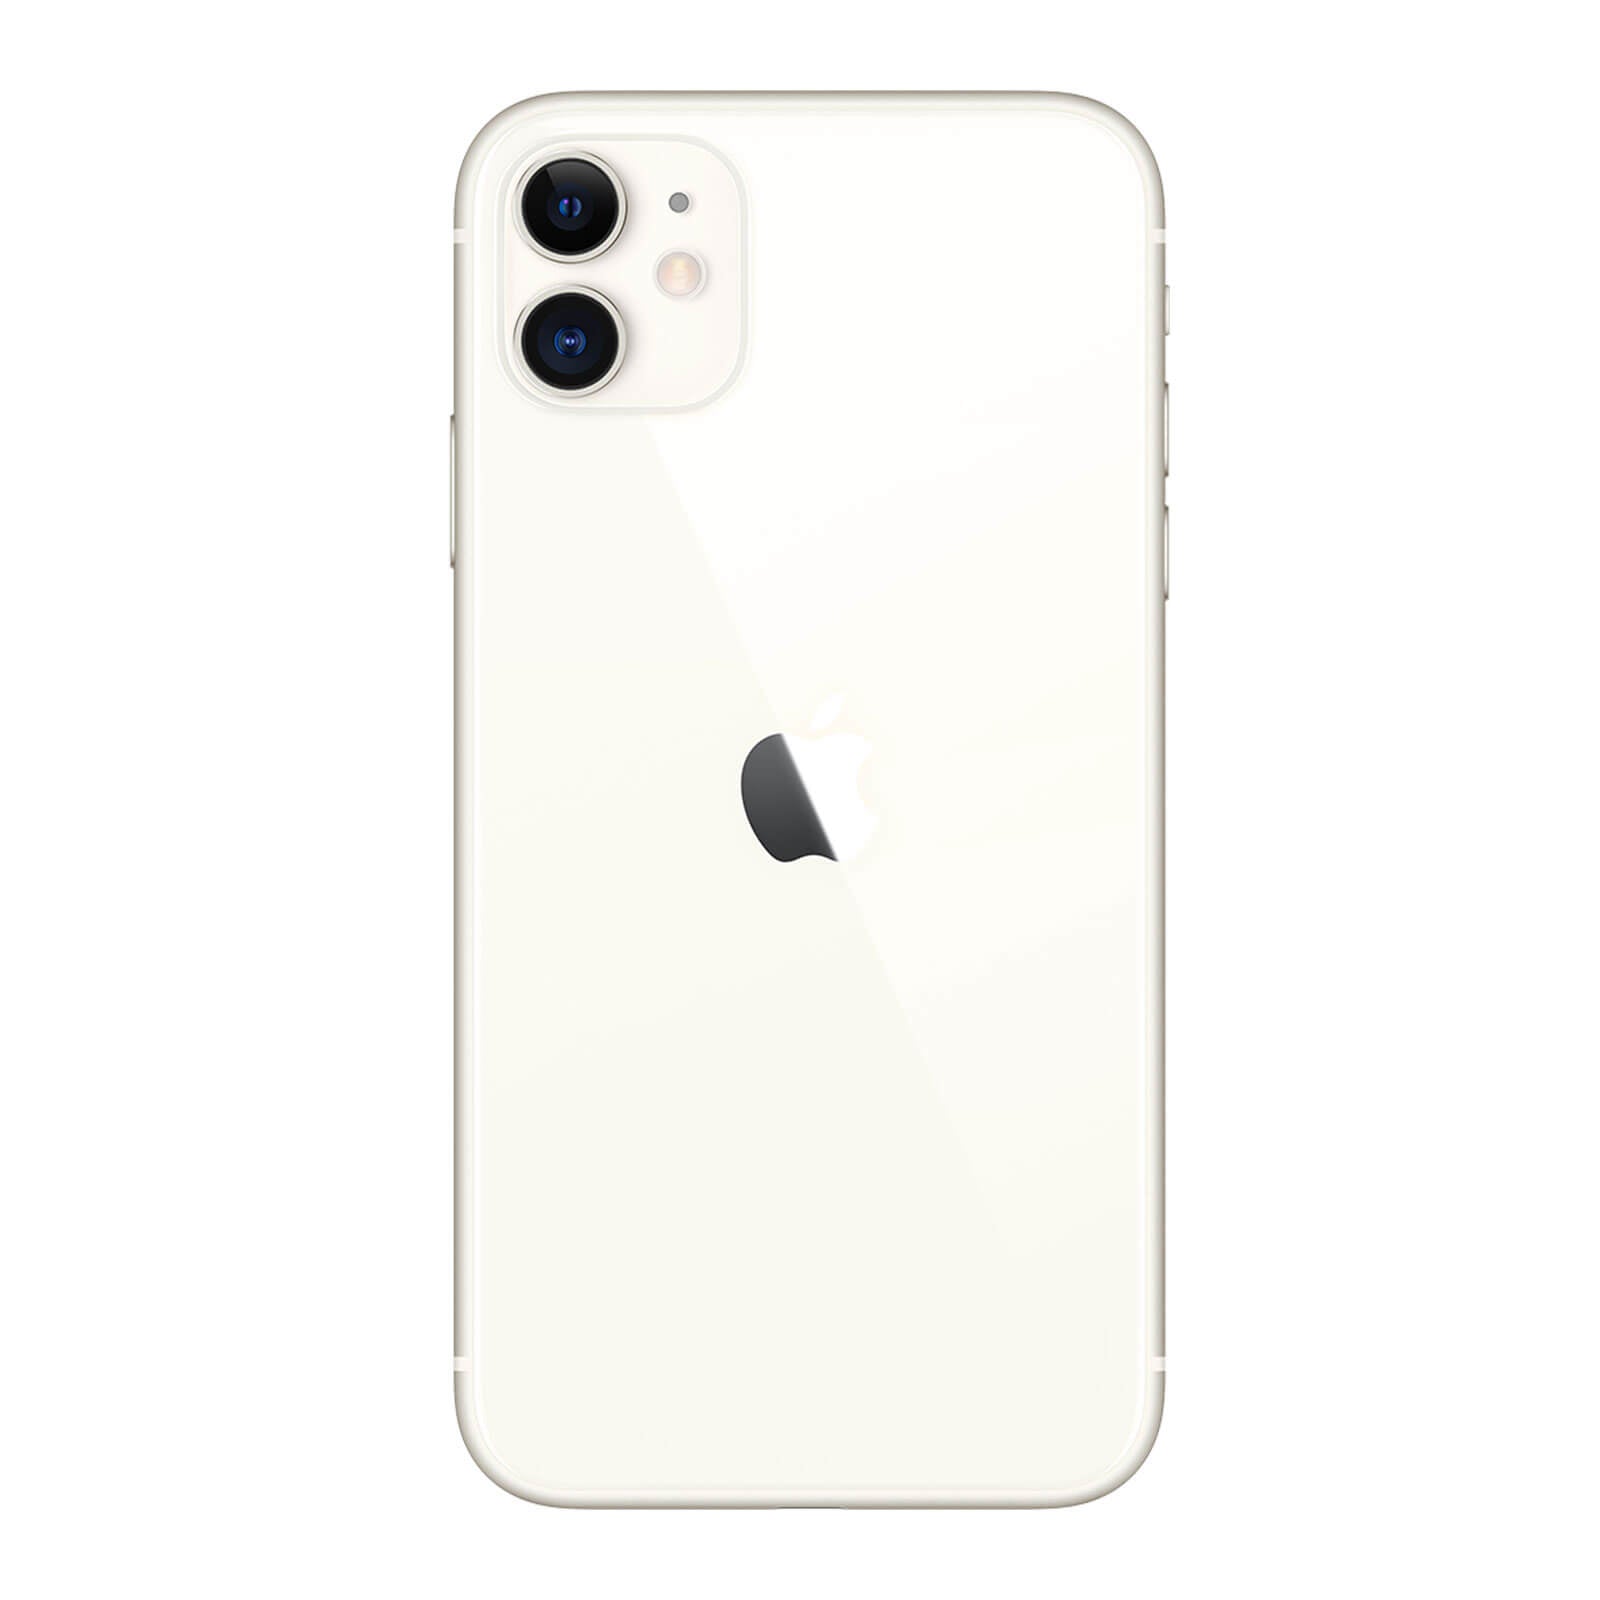 Apple iPhone 11 256GB White Fair - AT&T